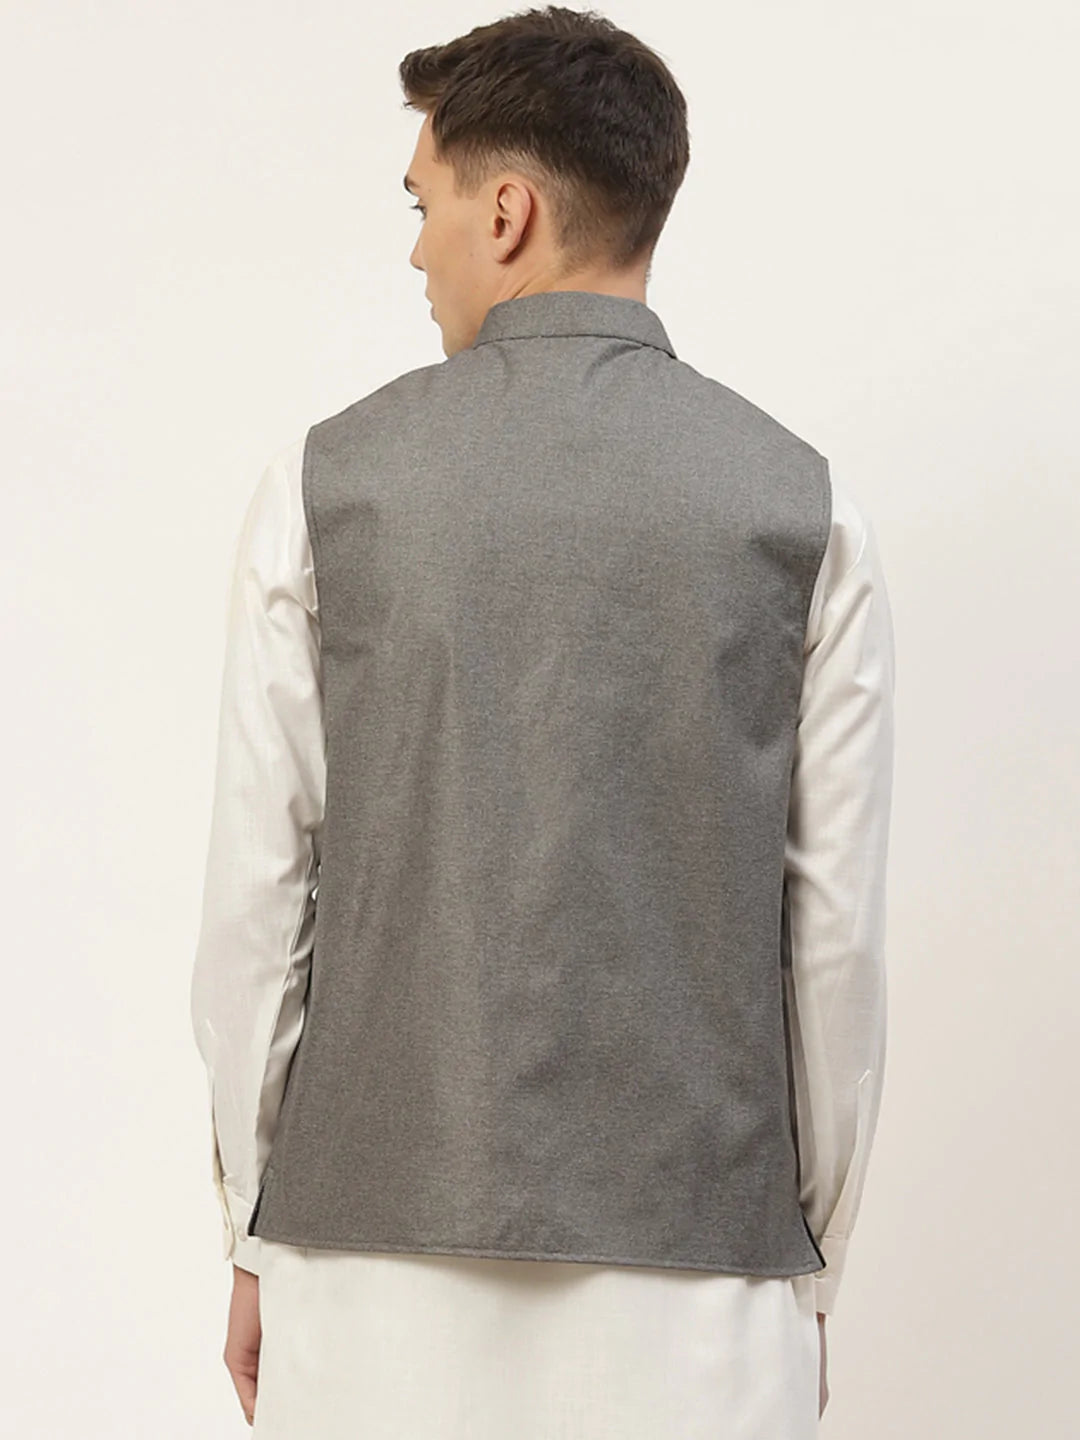 Jompers Men's Charcoal Solid Nehru Jacket ( JOWC 4033Charcoal )